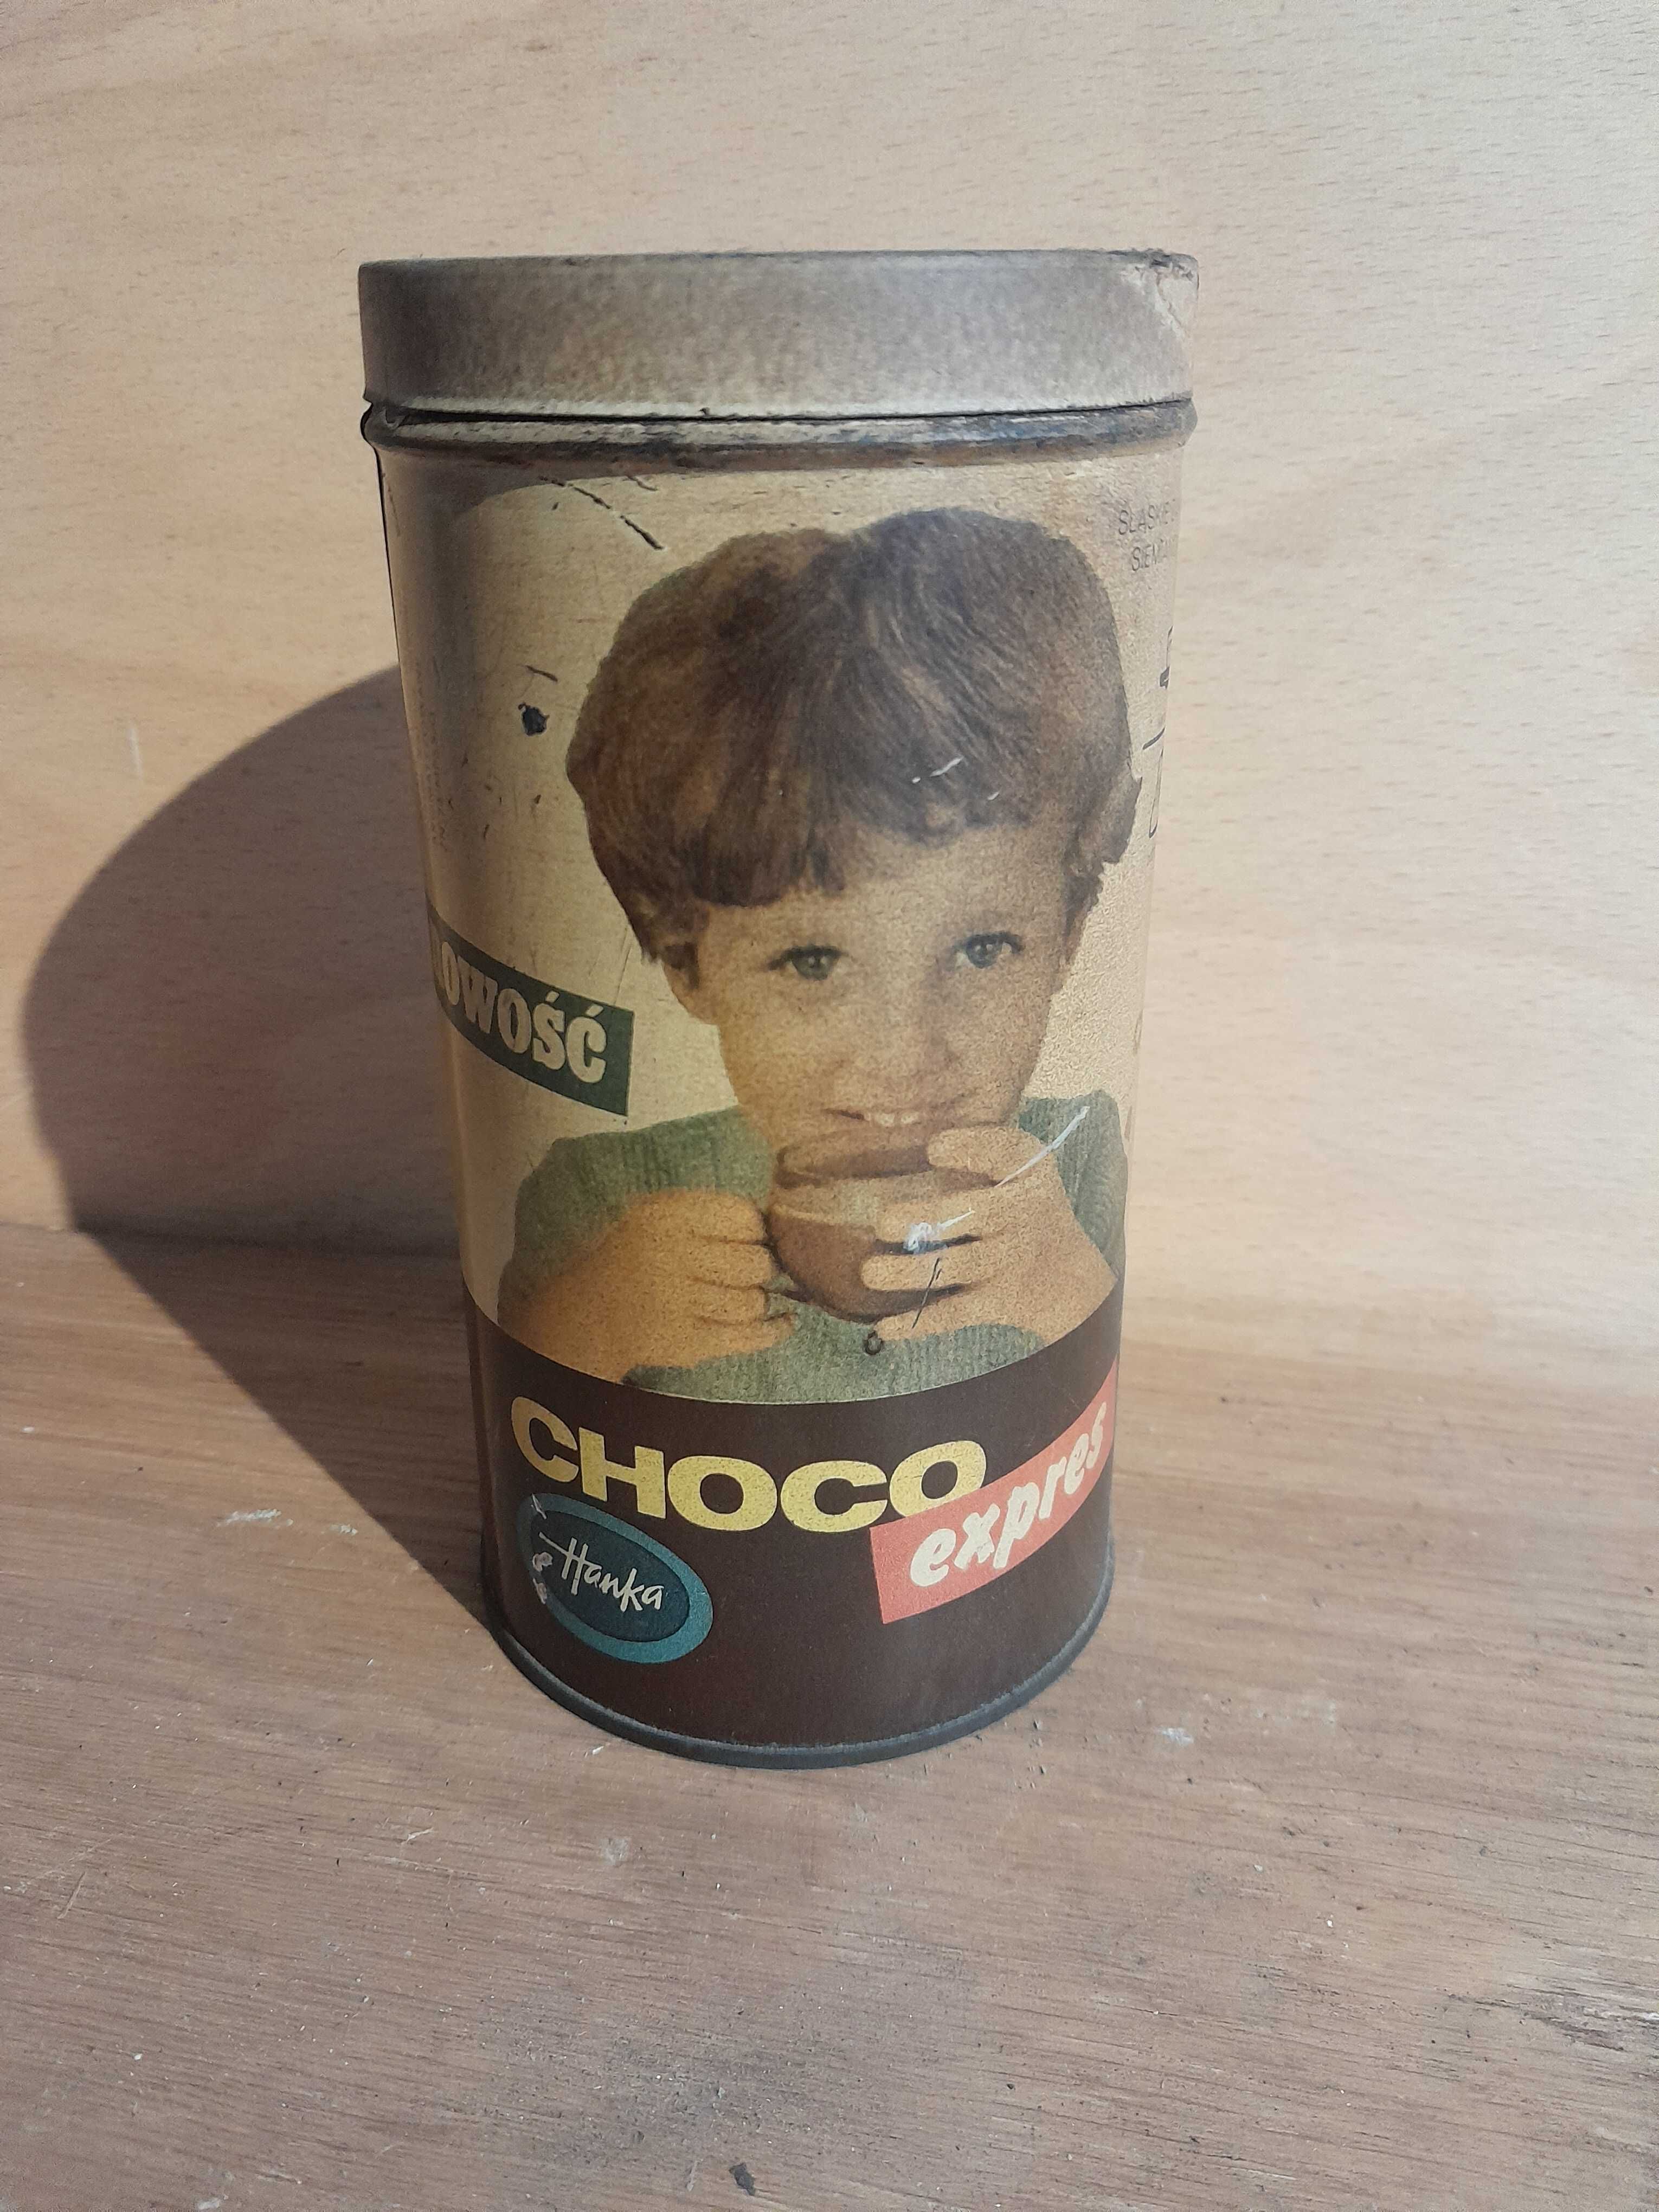 Stara puszka z kakao Choco Expres Hanka zabytek PRL do kolekcji